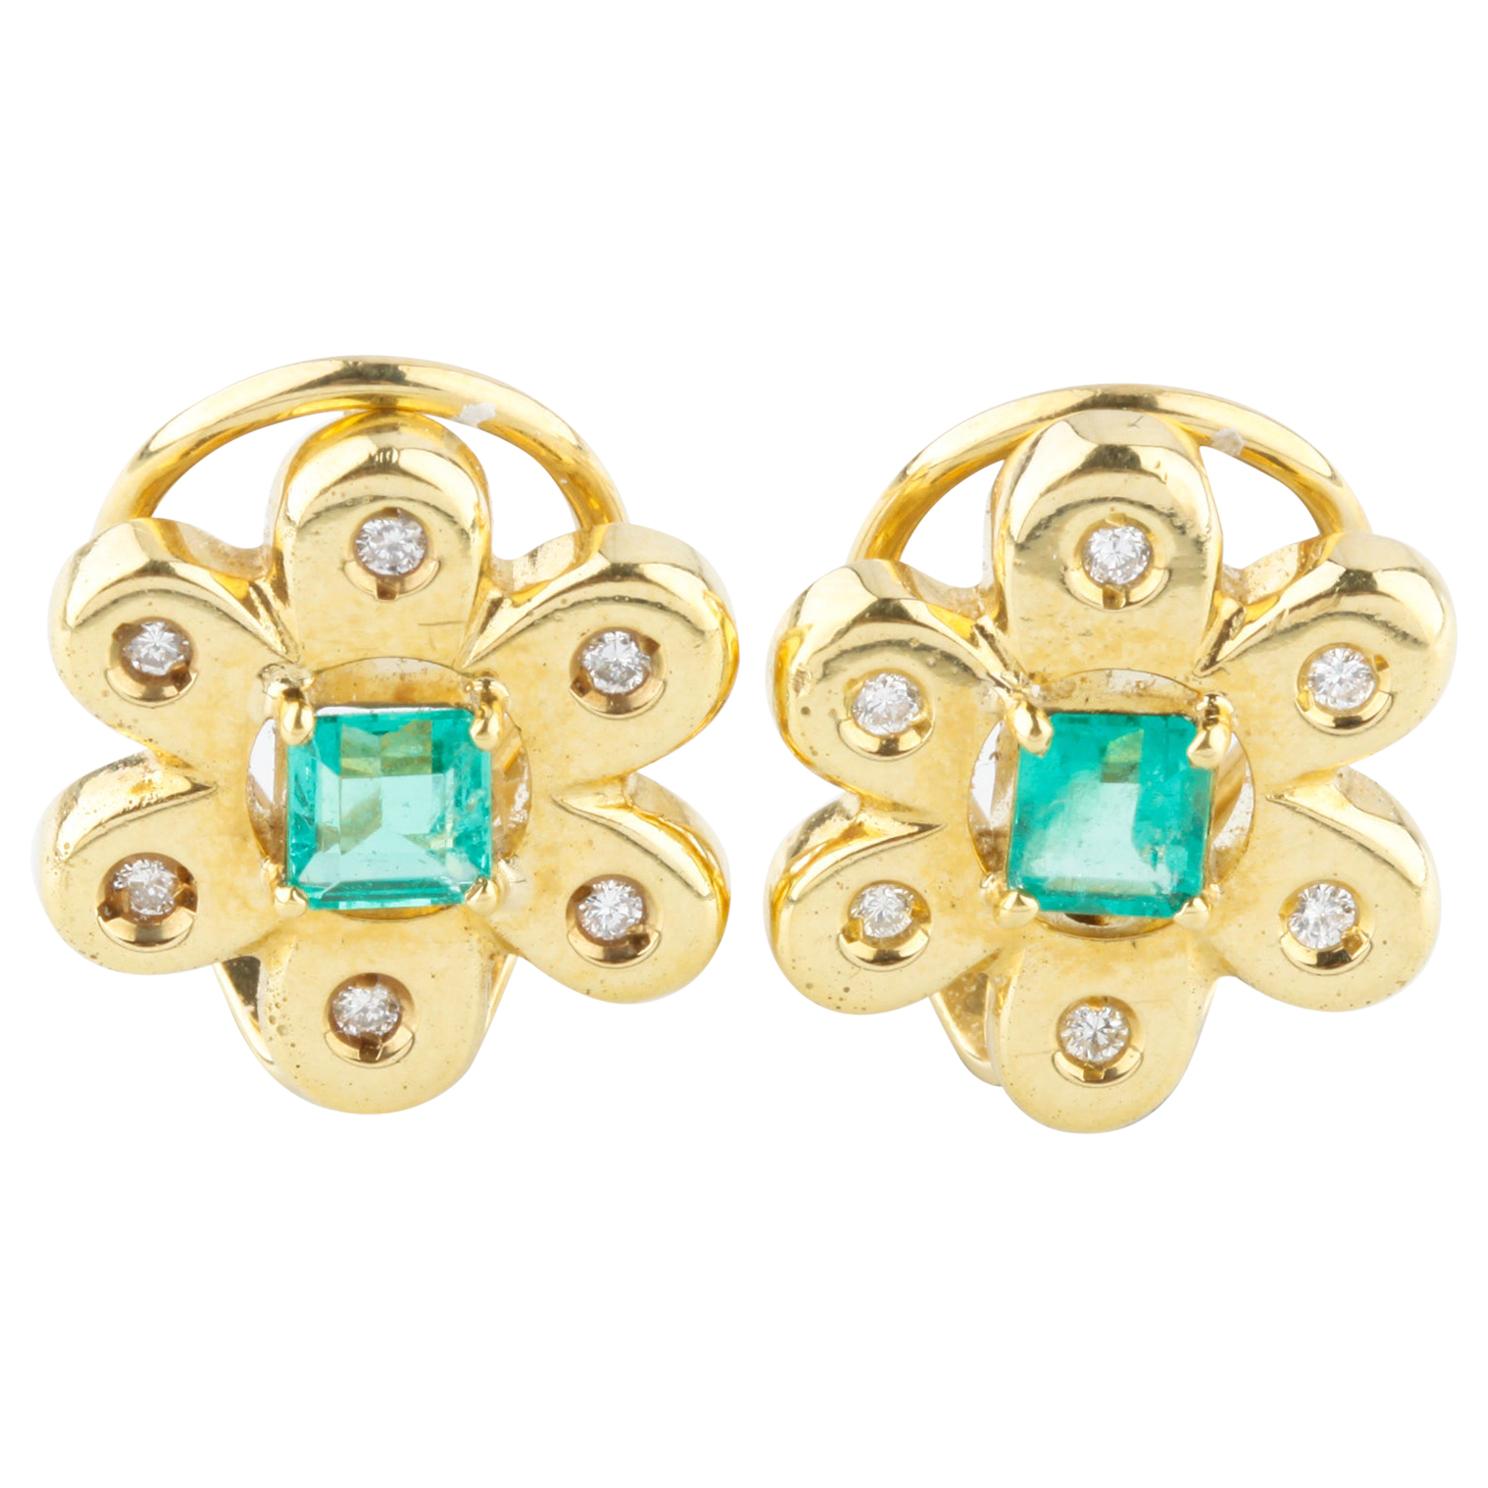 Emerald and Diamond Flower Design Earrings in 18 Karat Yellow Gold